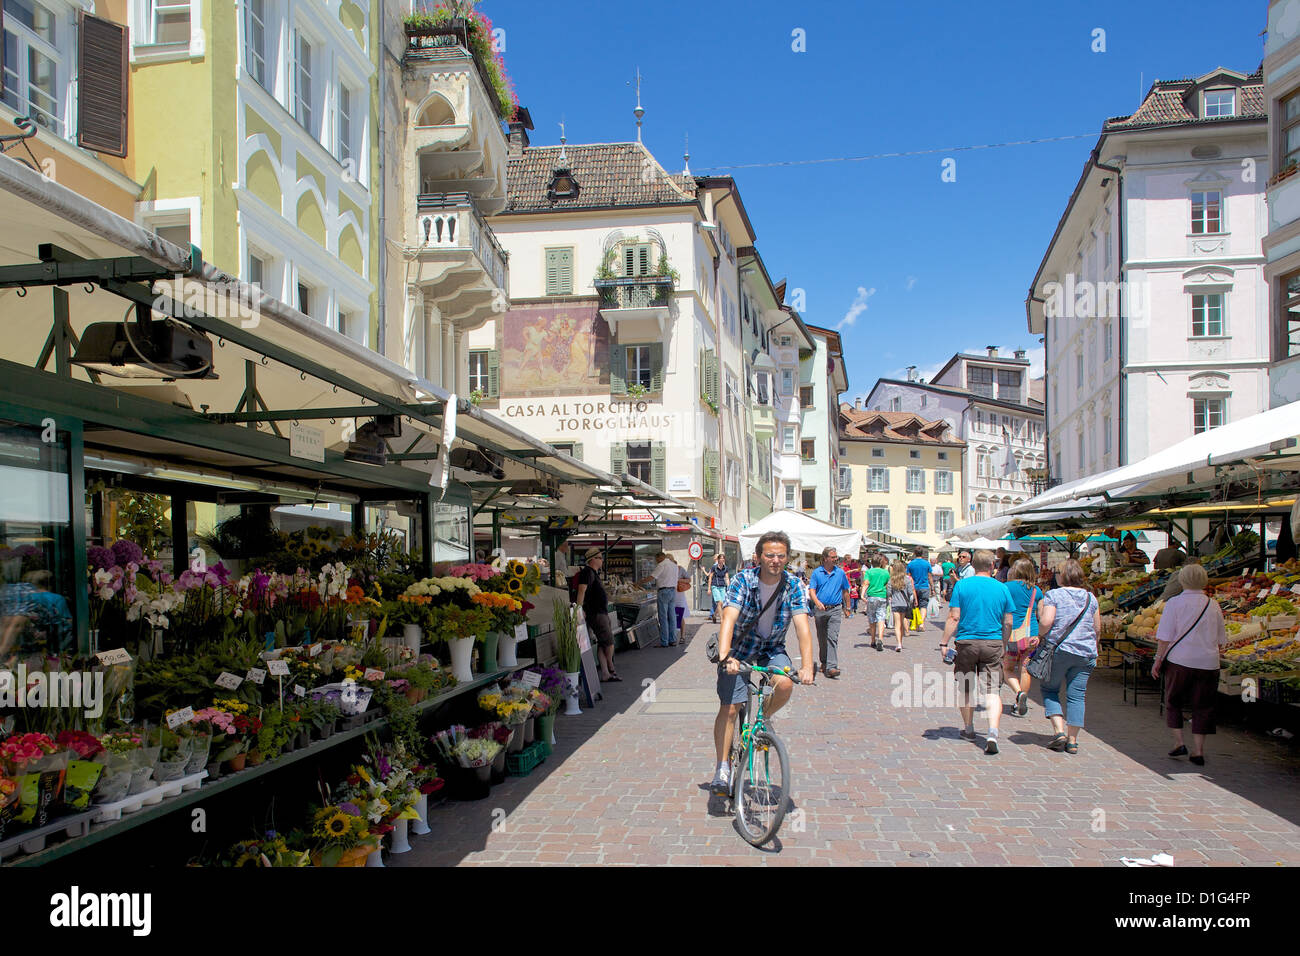 Marktstände, Piazza Erbe Markt, Bozen, Provinz Bozen, Trentino-Alto Adige, Italien, Europa Stockfoto